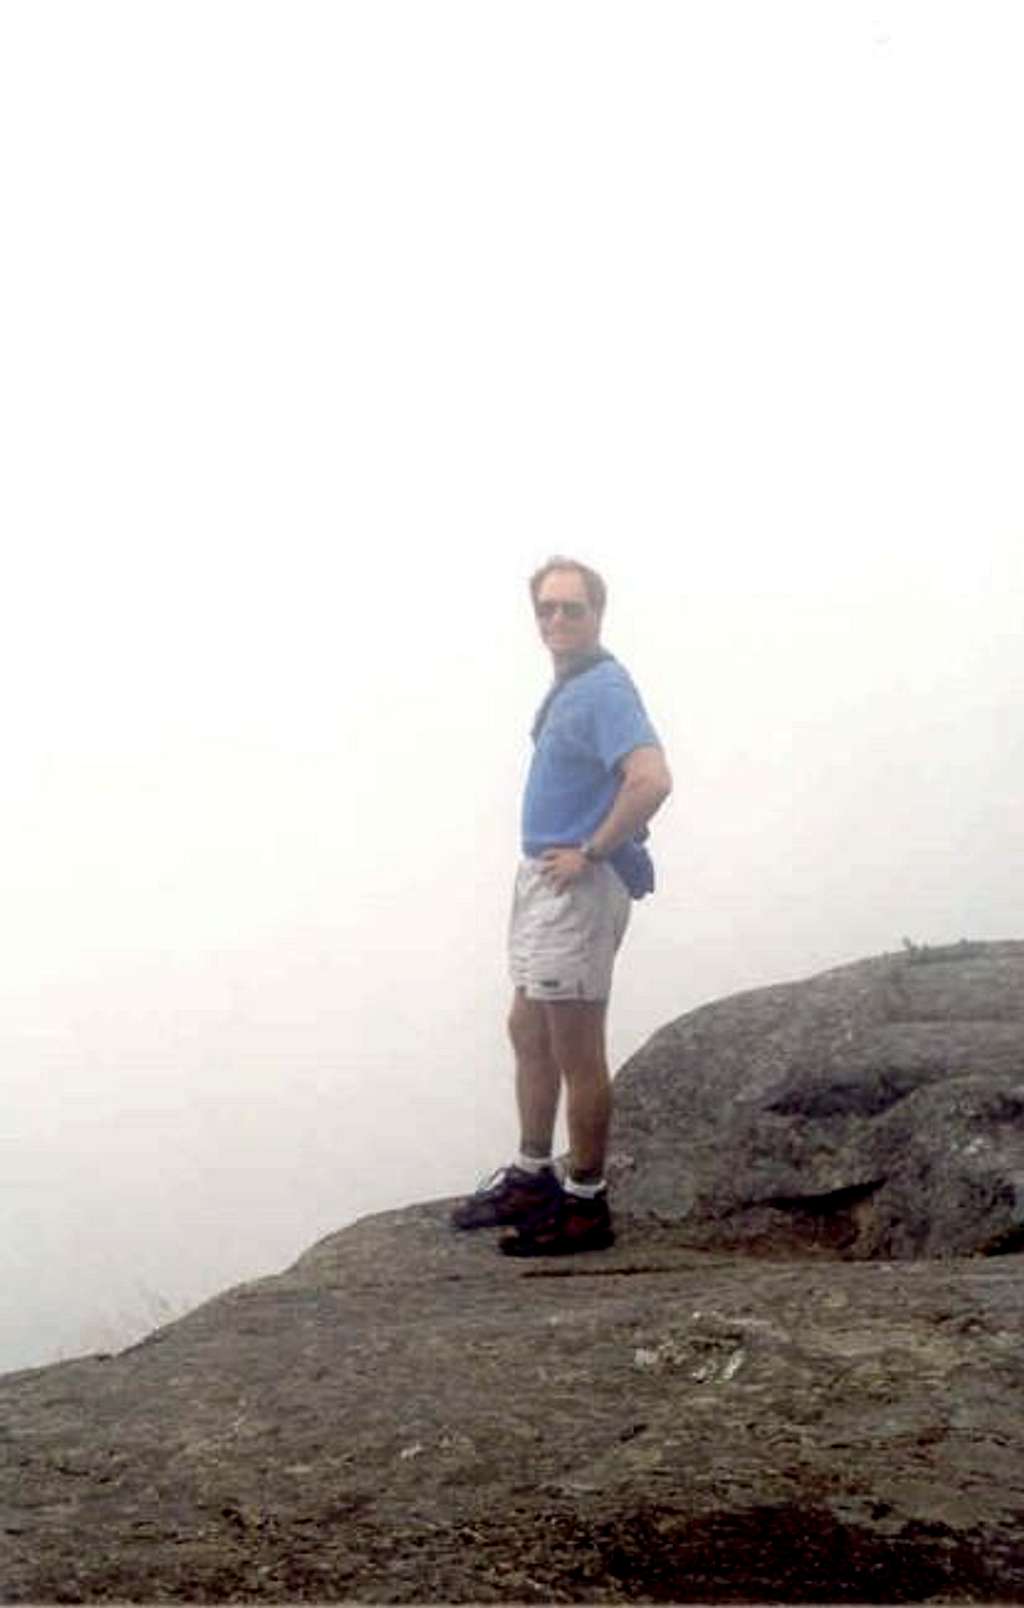 Geologist Chuck on the cliffs...